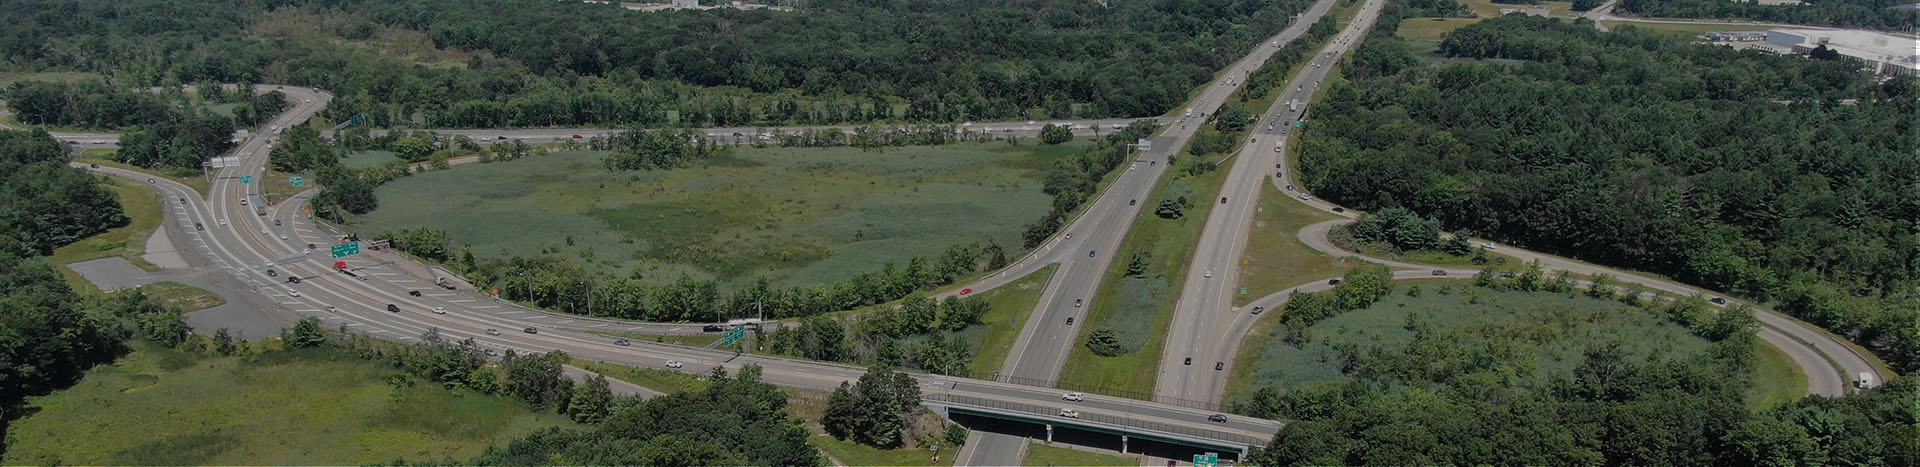 I-495 interchange at I-90 in Hopkinton/Westborough, MA